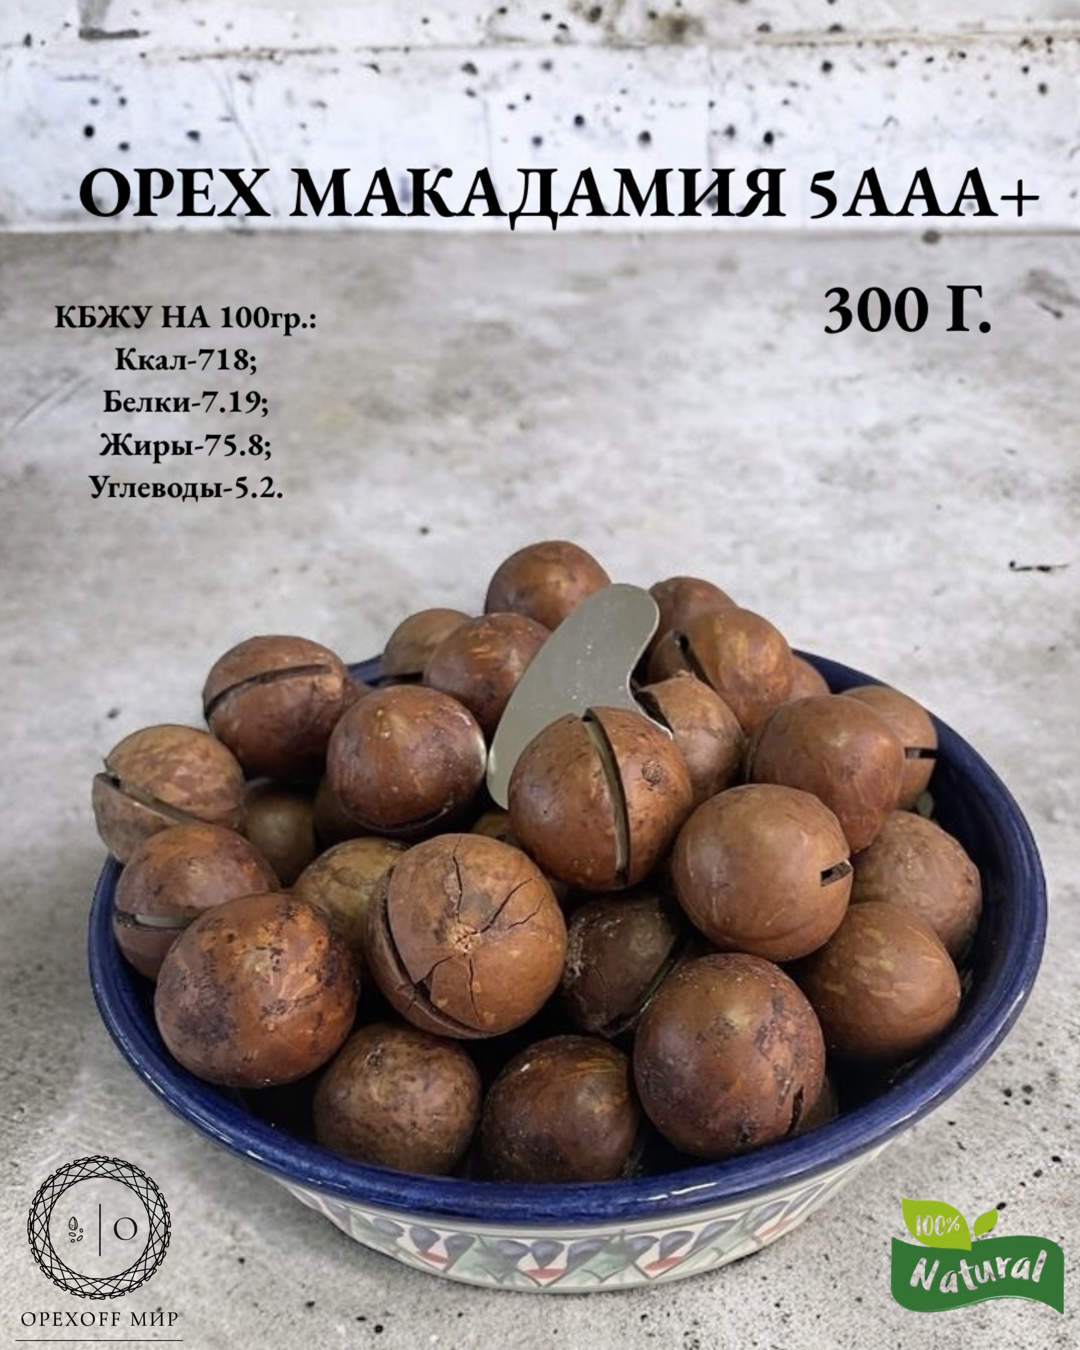 Орех Макадамия-5+AAА, самый крупный размер,300 грамм!